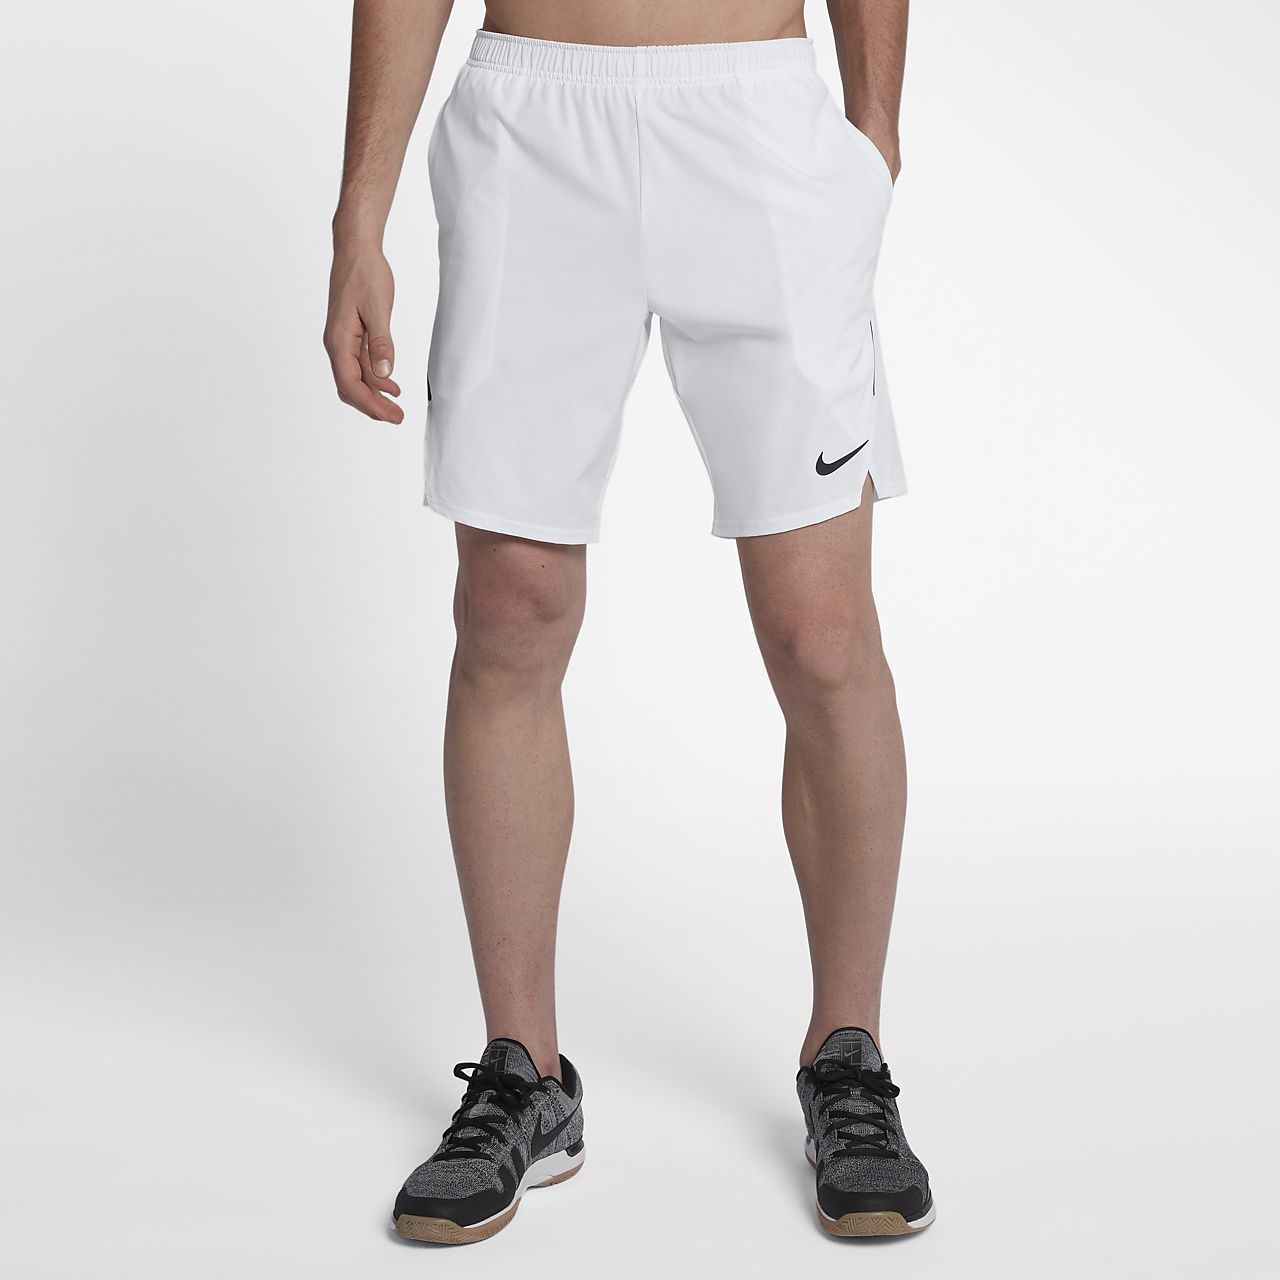 mens tennis shorts nike